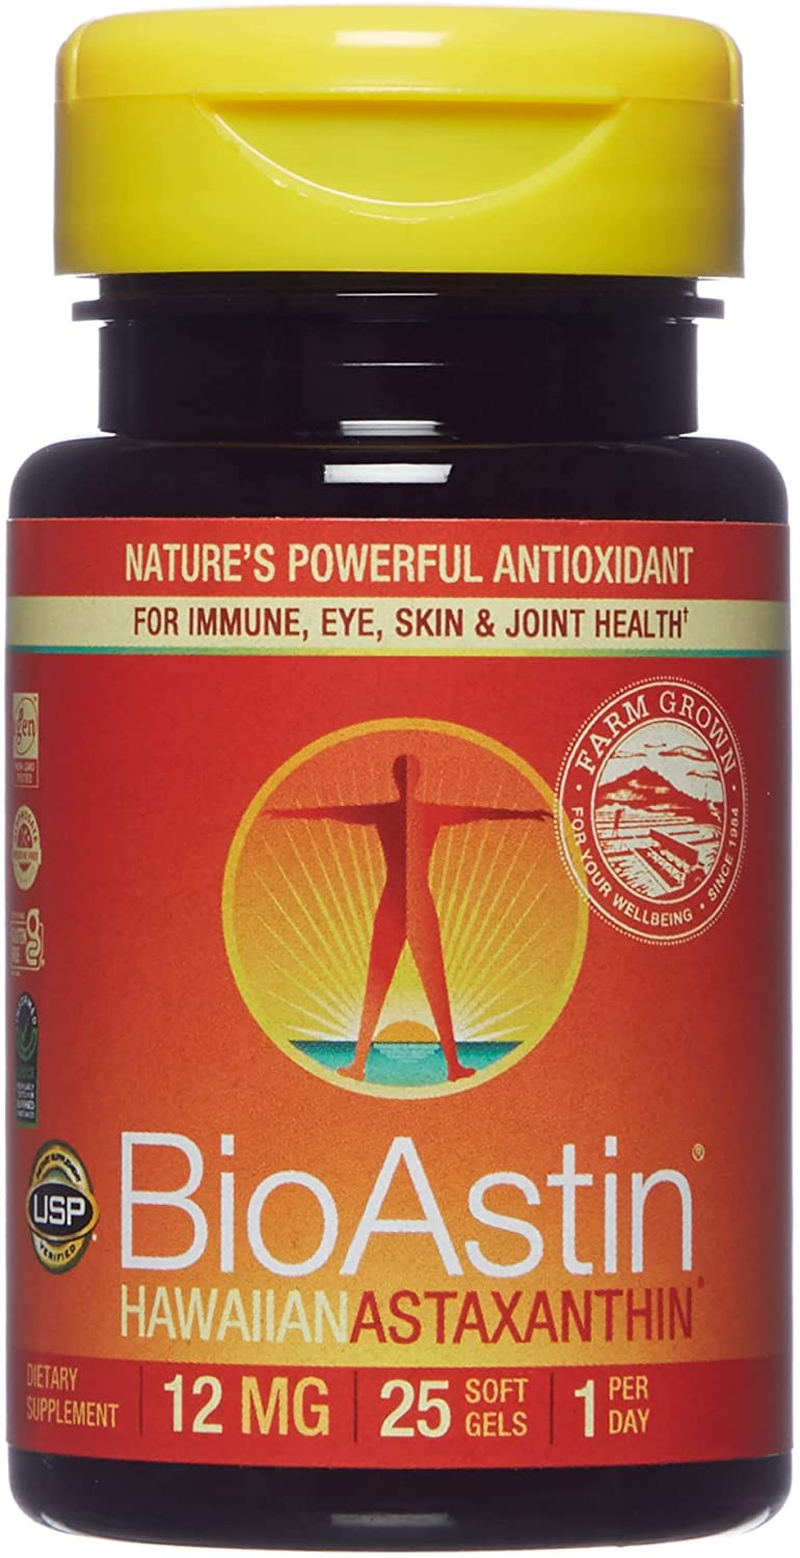 , Bioastin Hawaiian Astaxanthin 12 Mg, Boosts Immunity and Supports Eye, Skin and Joint Health, 25 Count